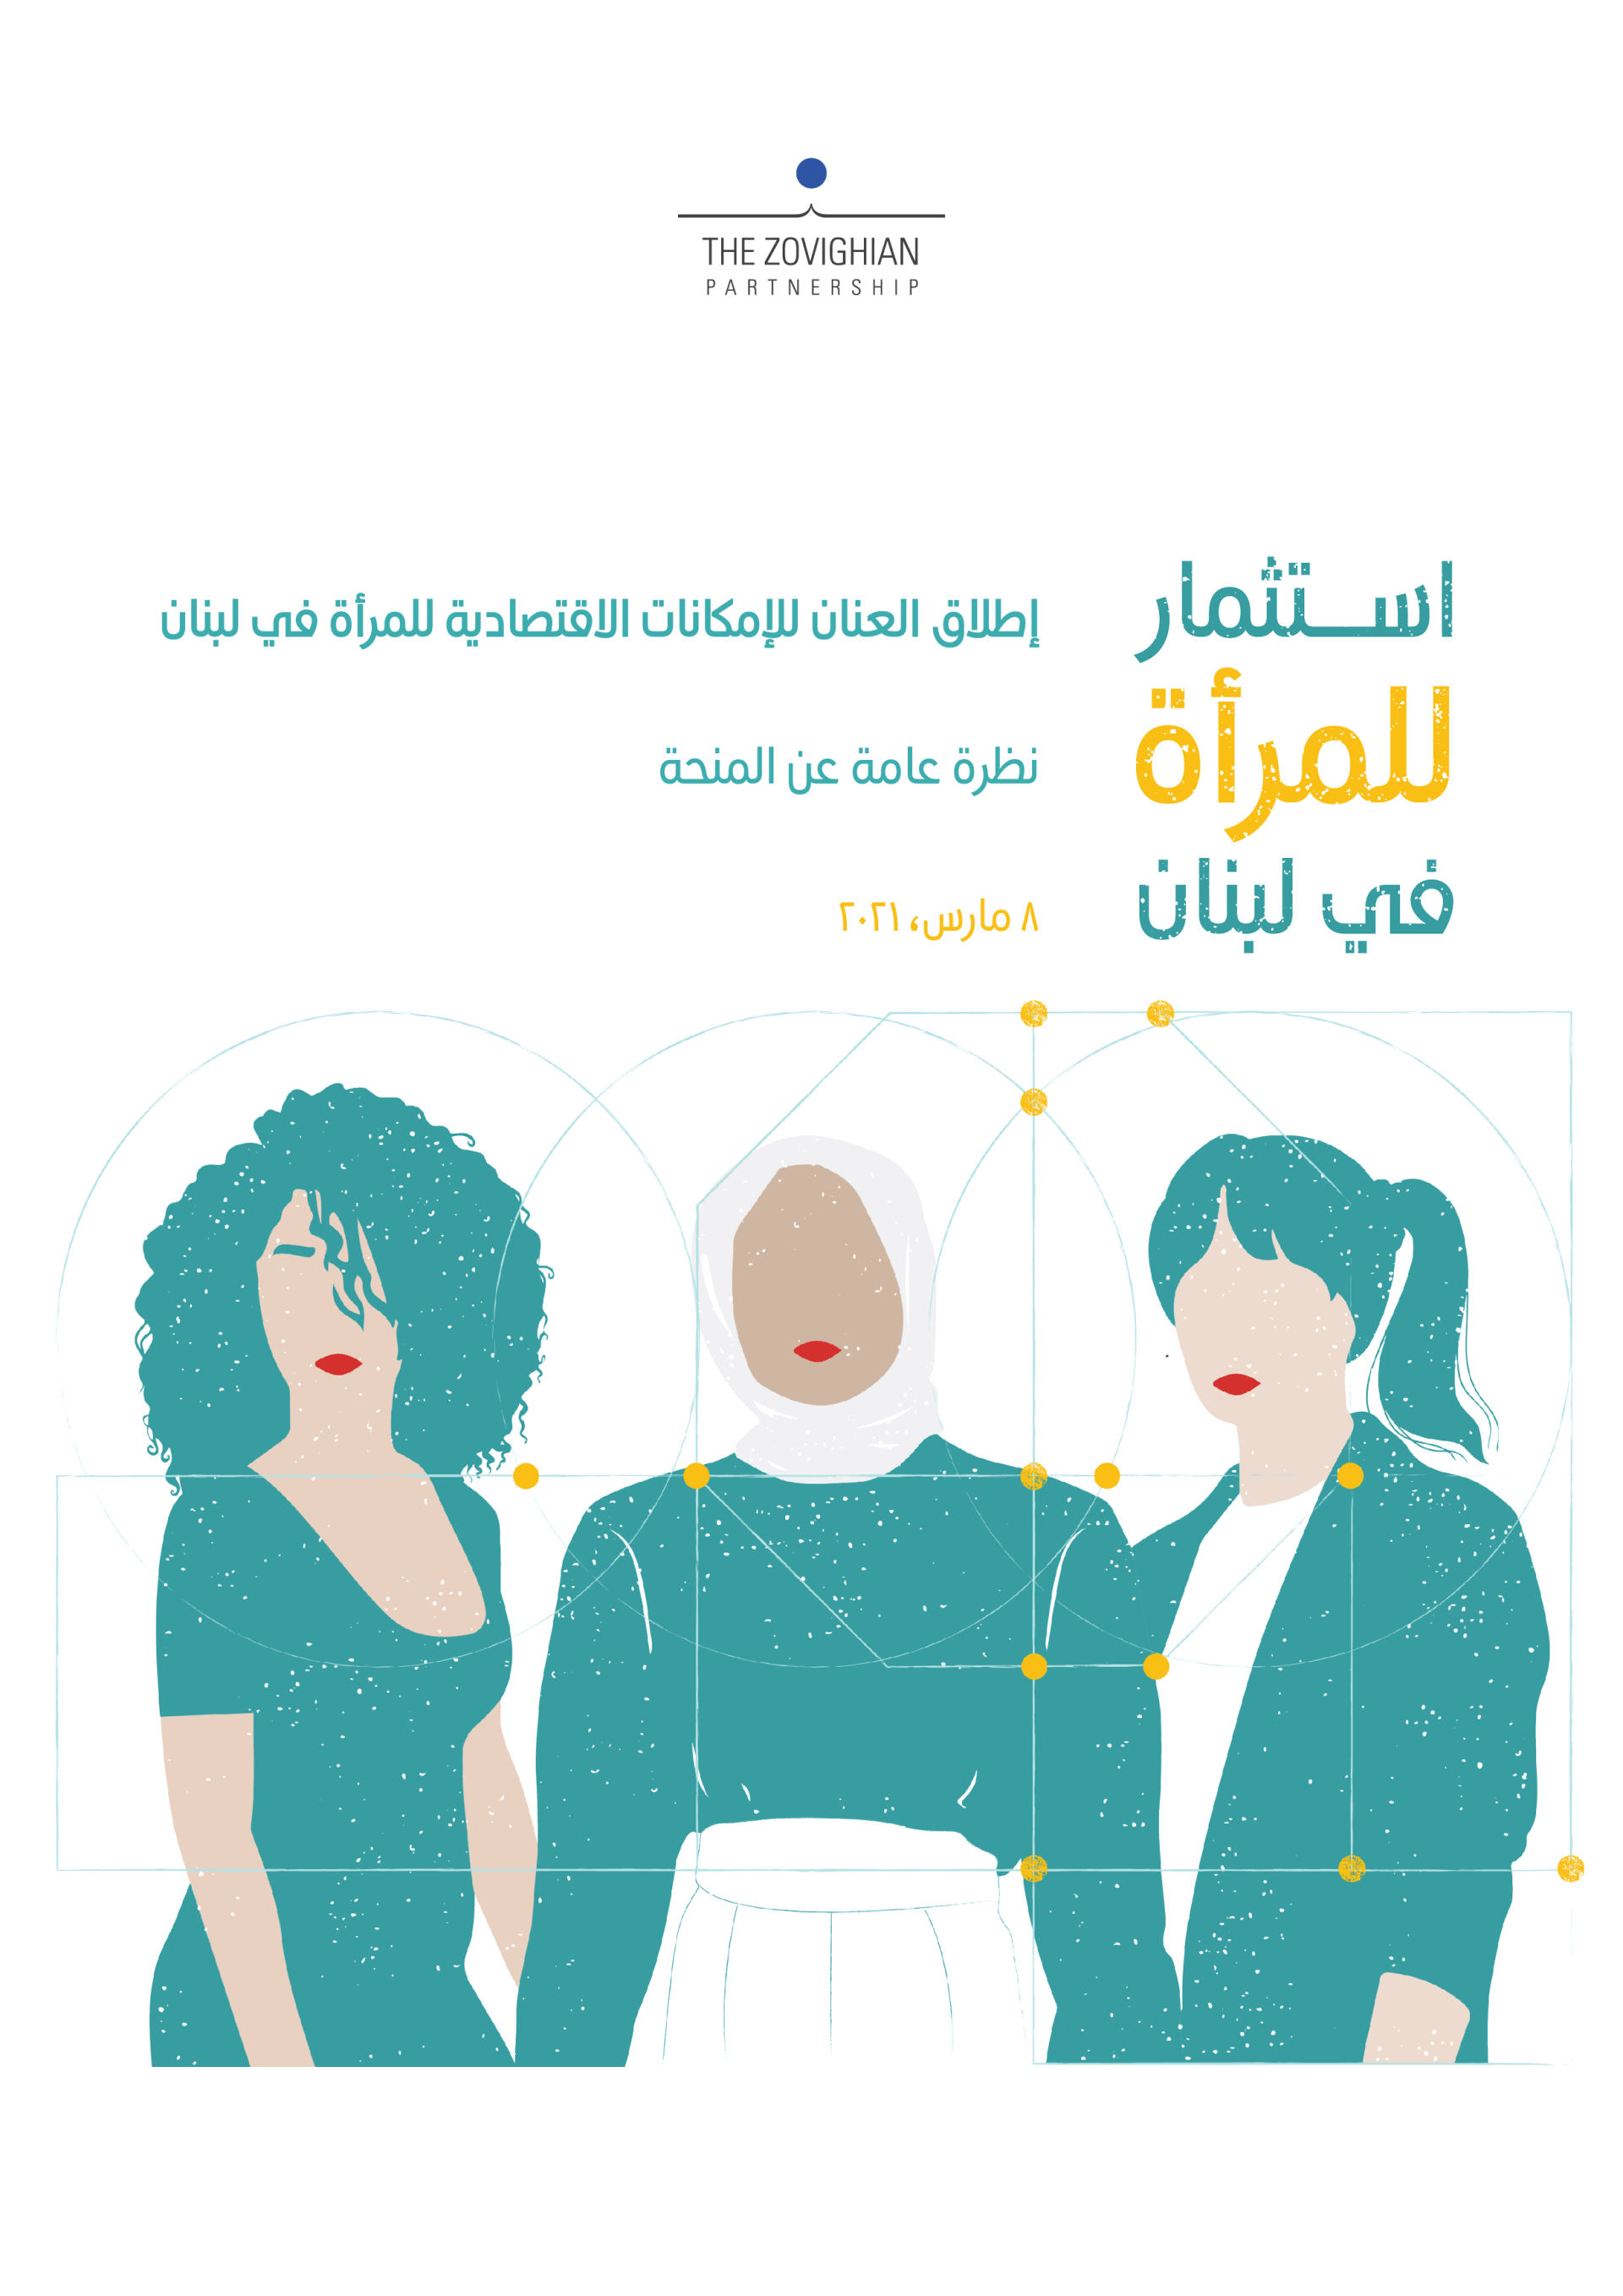 Grant for the economic empowerment of women in Lebanon announced